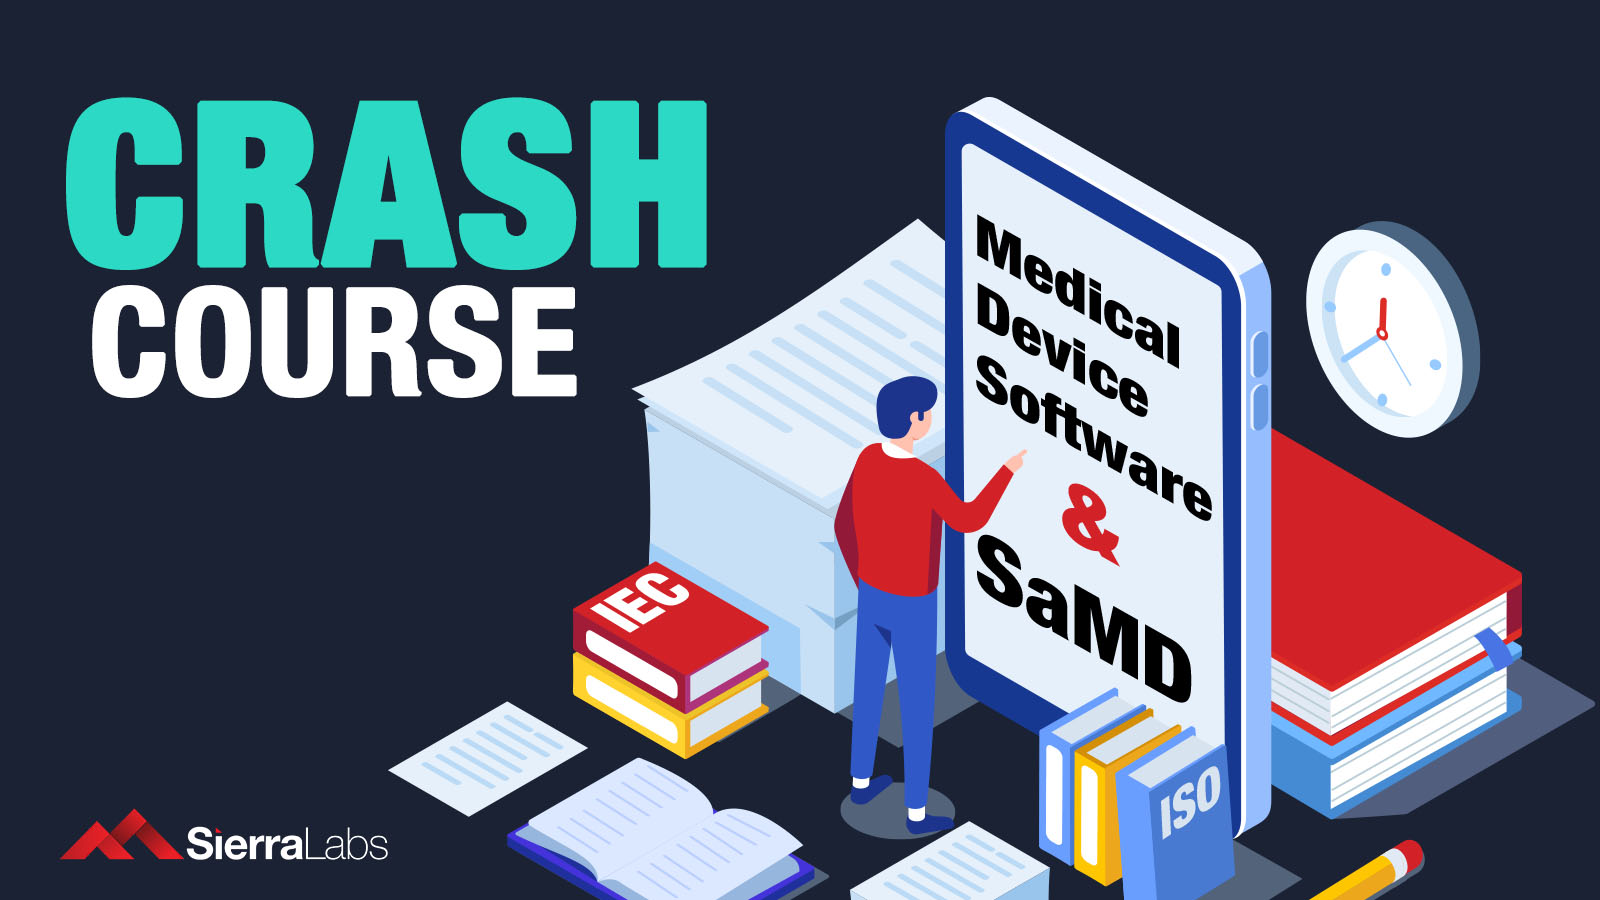 Medical Device Software & SaMDs: A Crash Course